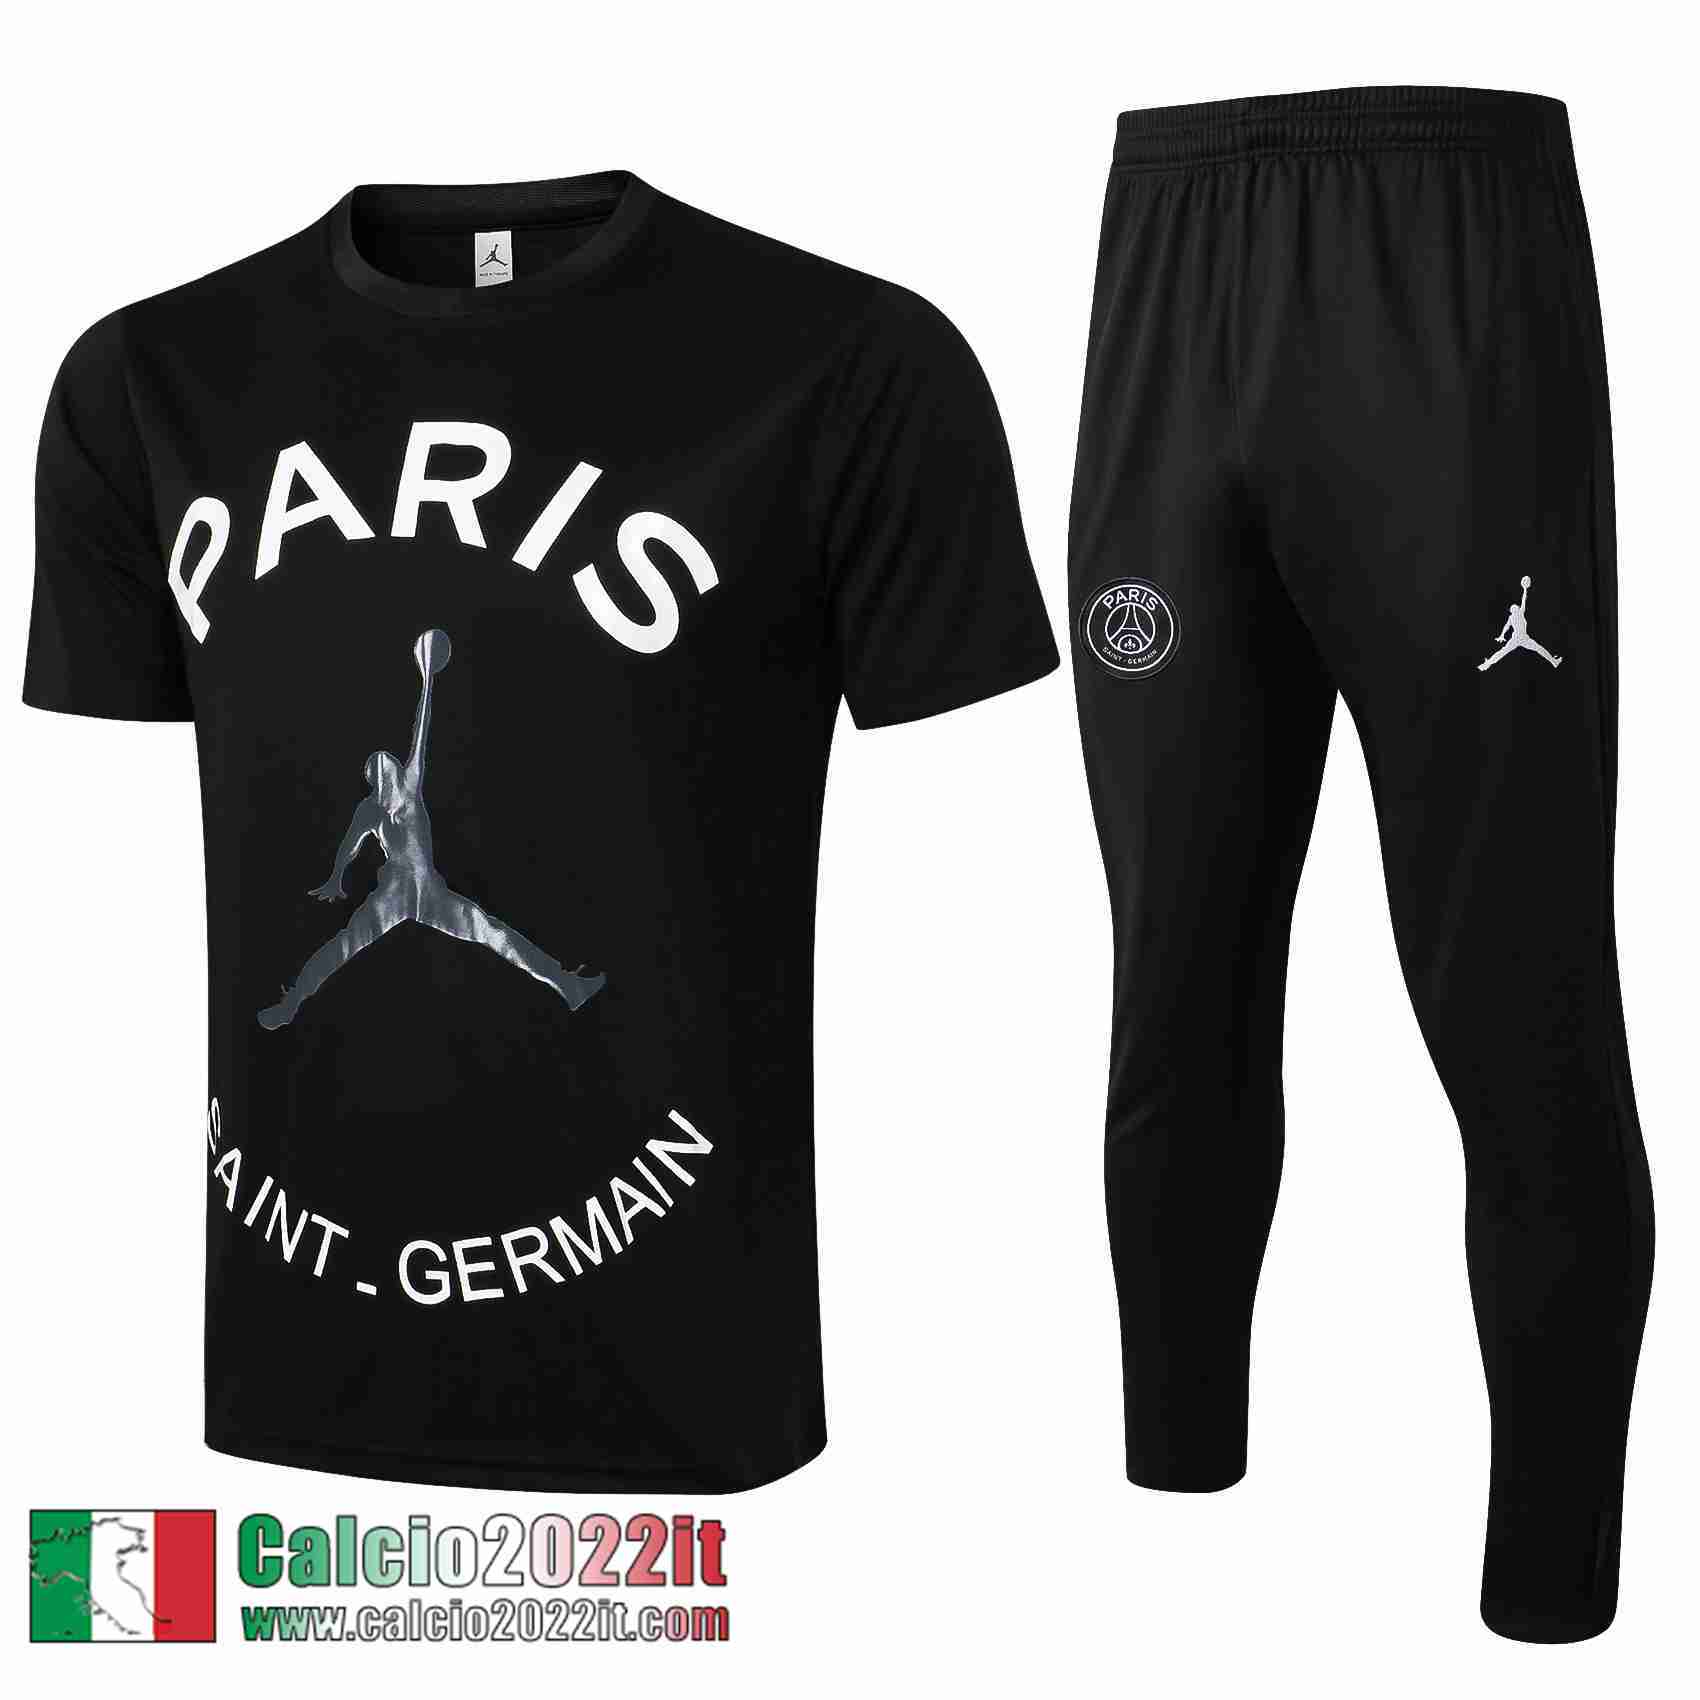 Paris Saint Germain Psg Maglia T-shirt Nera Pl10 2021 2022